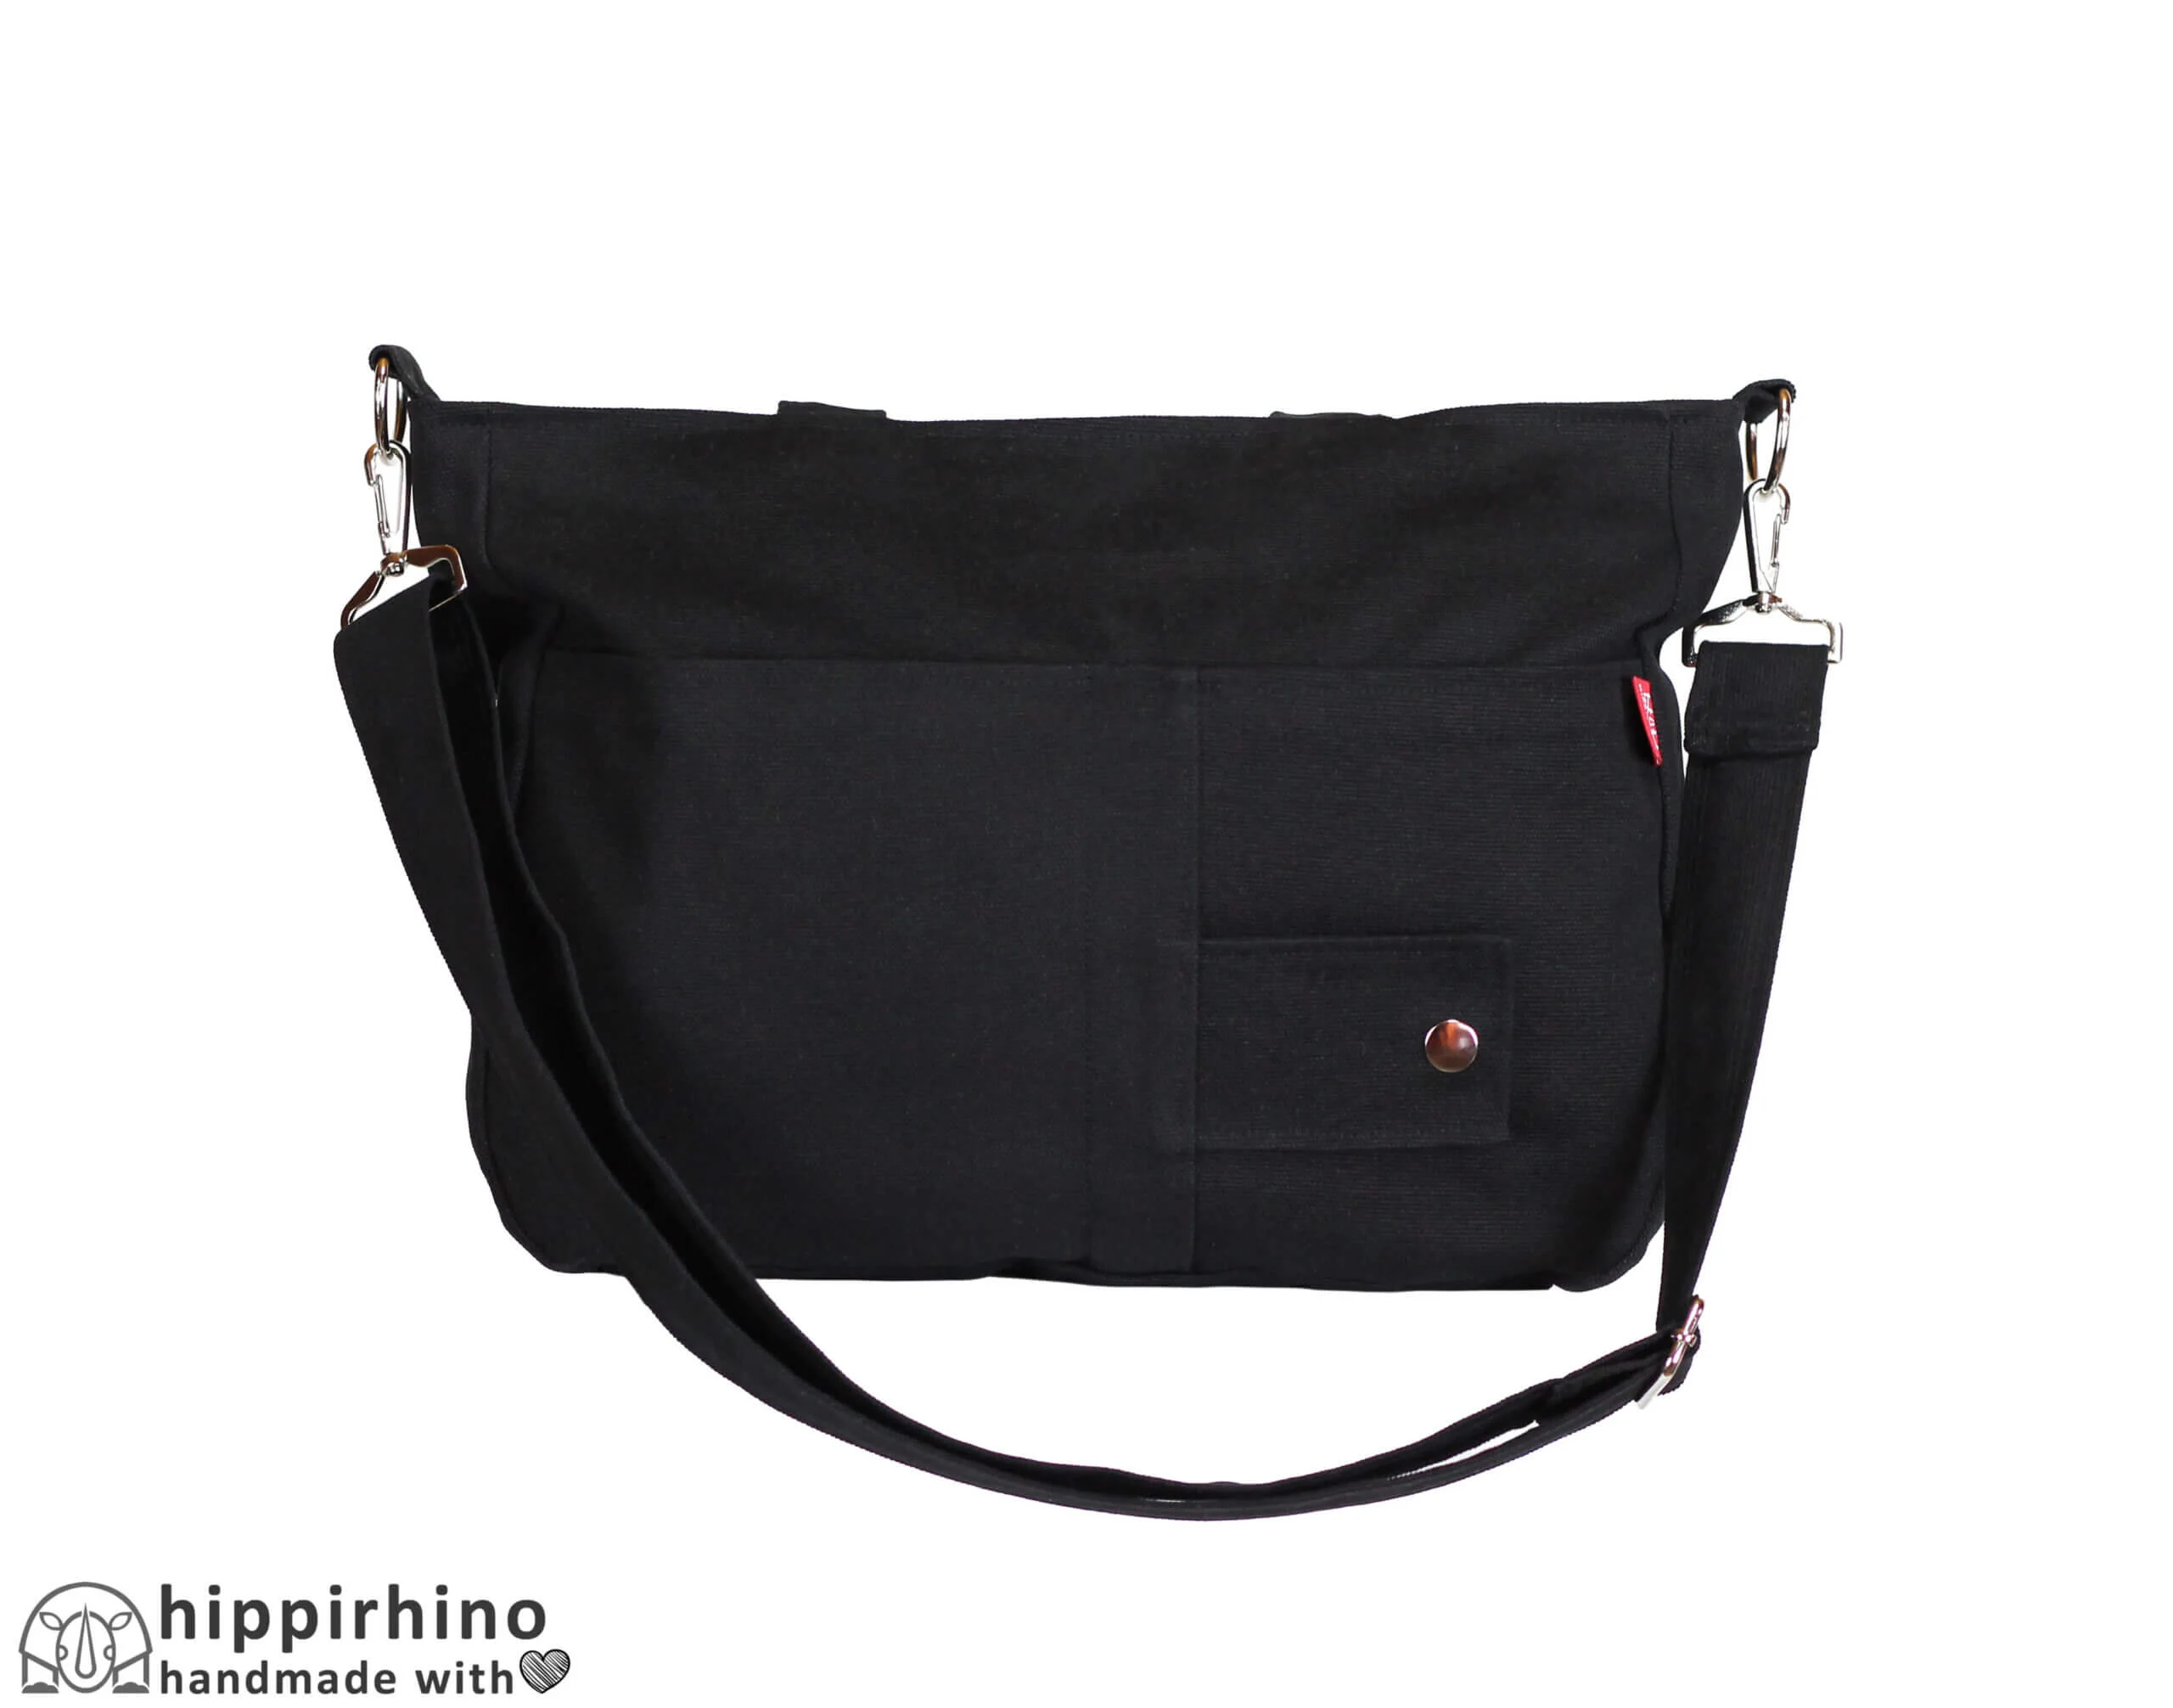 Buy Black Shoulder Bag For Women Online in India | VeroModa